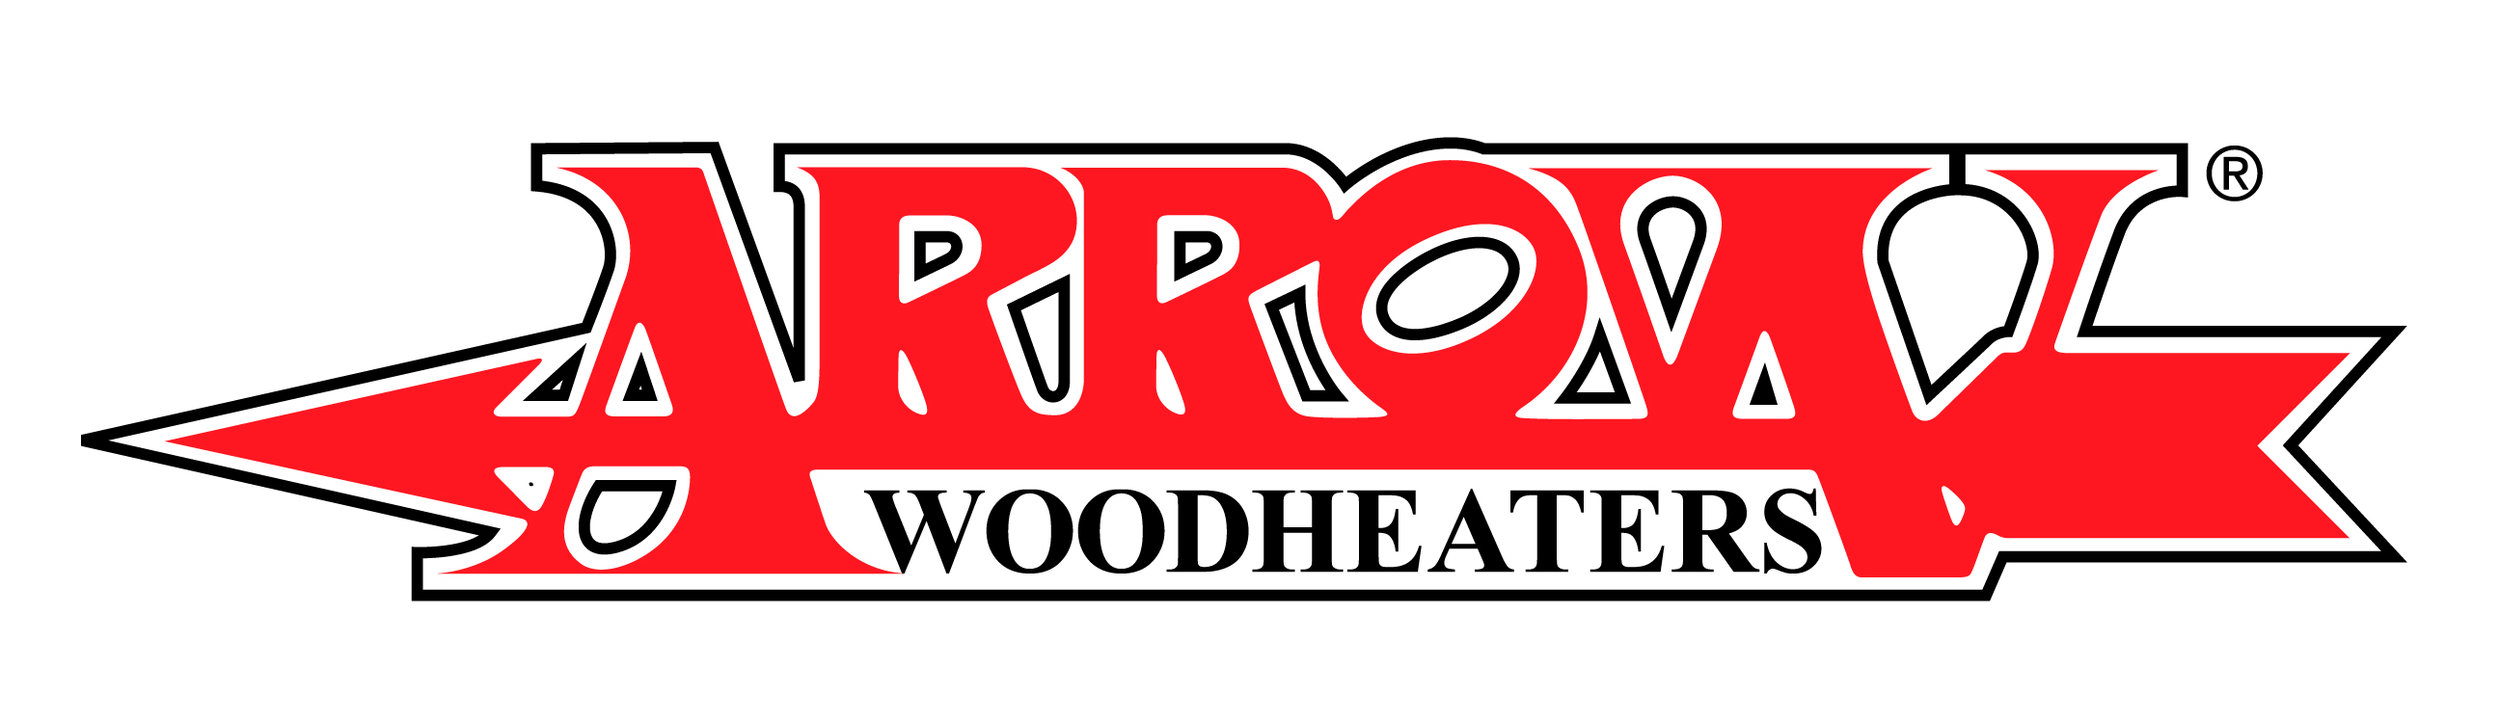 Arrow Woodheaters logo.jpg